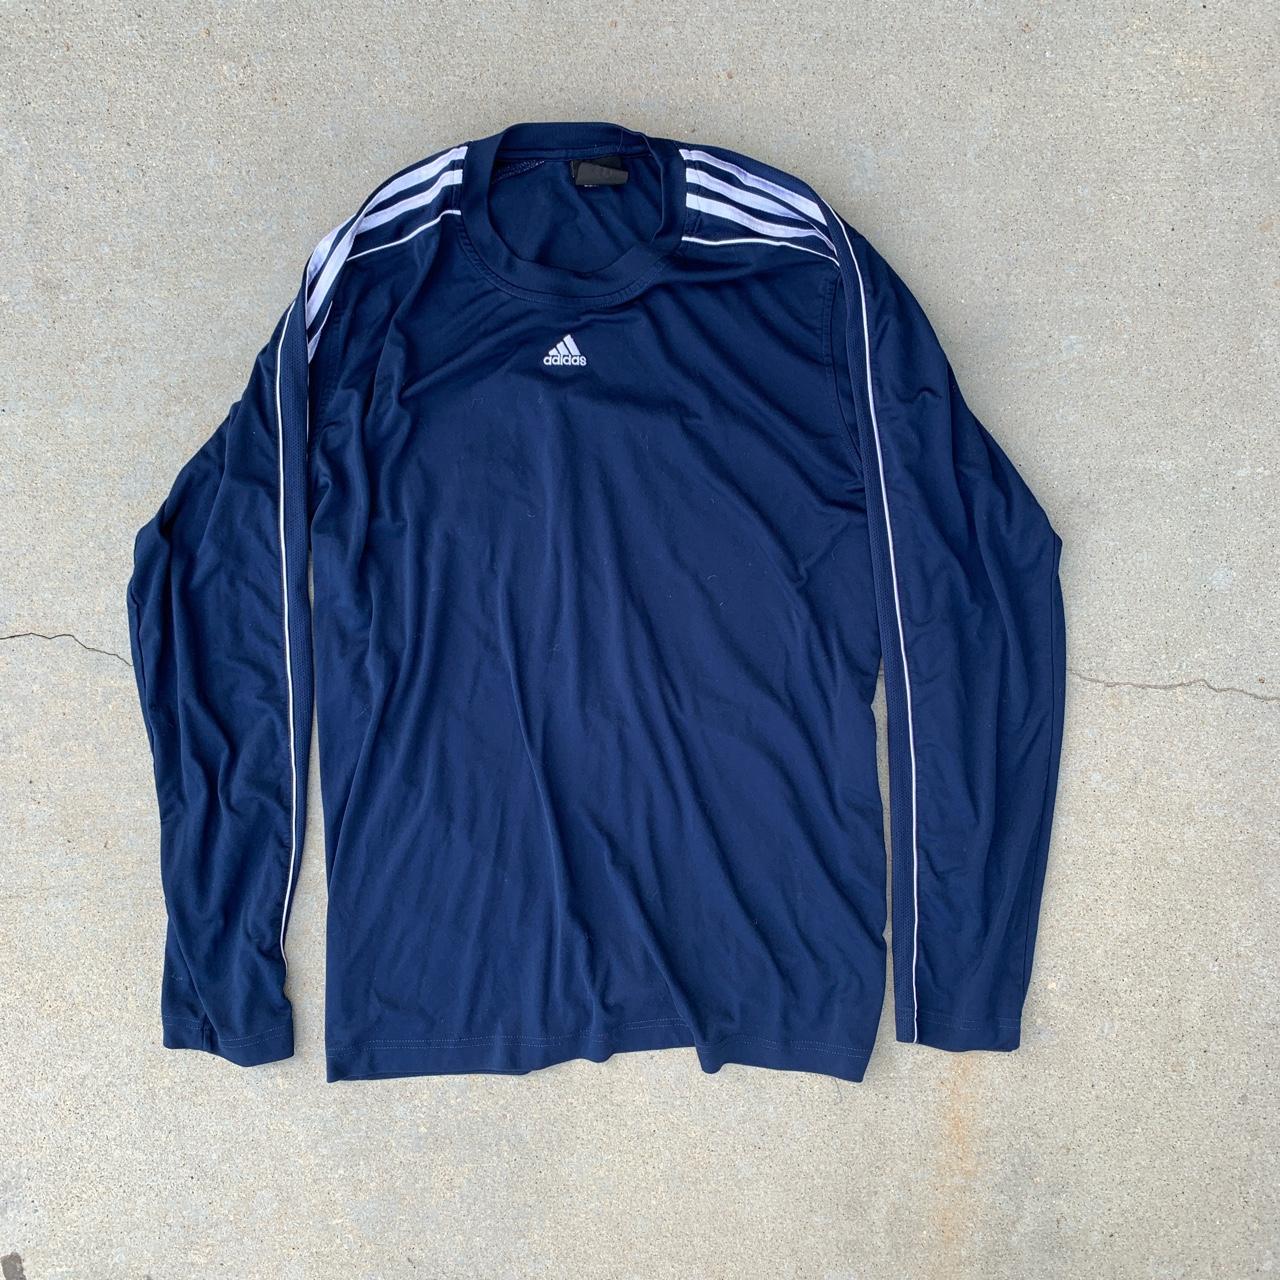 Blue Adidas Long Sleeve Shirt (Large) 50% Cotton... - Depop